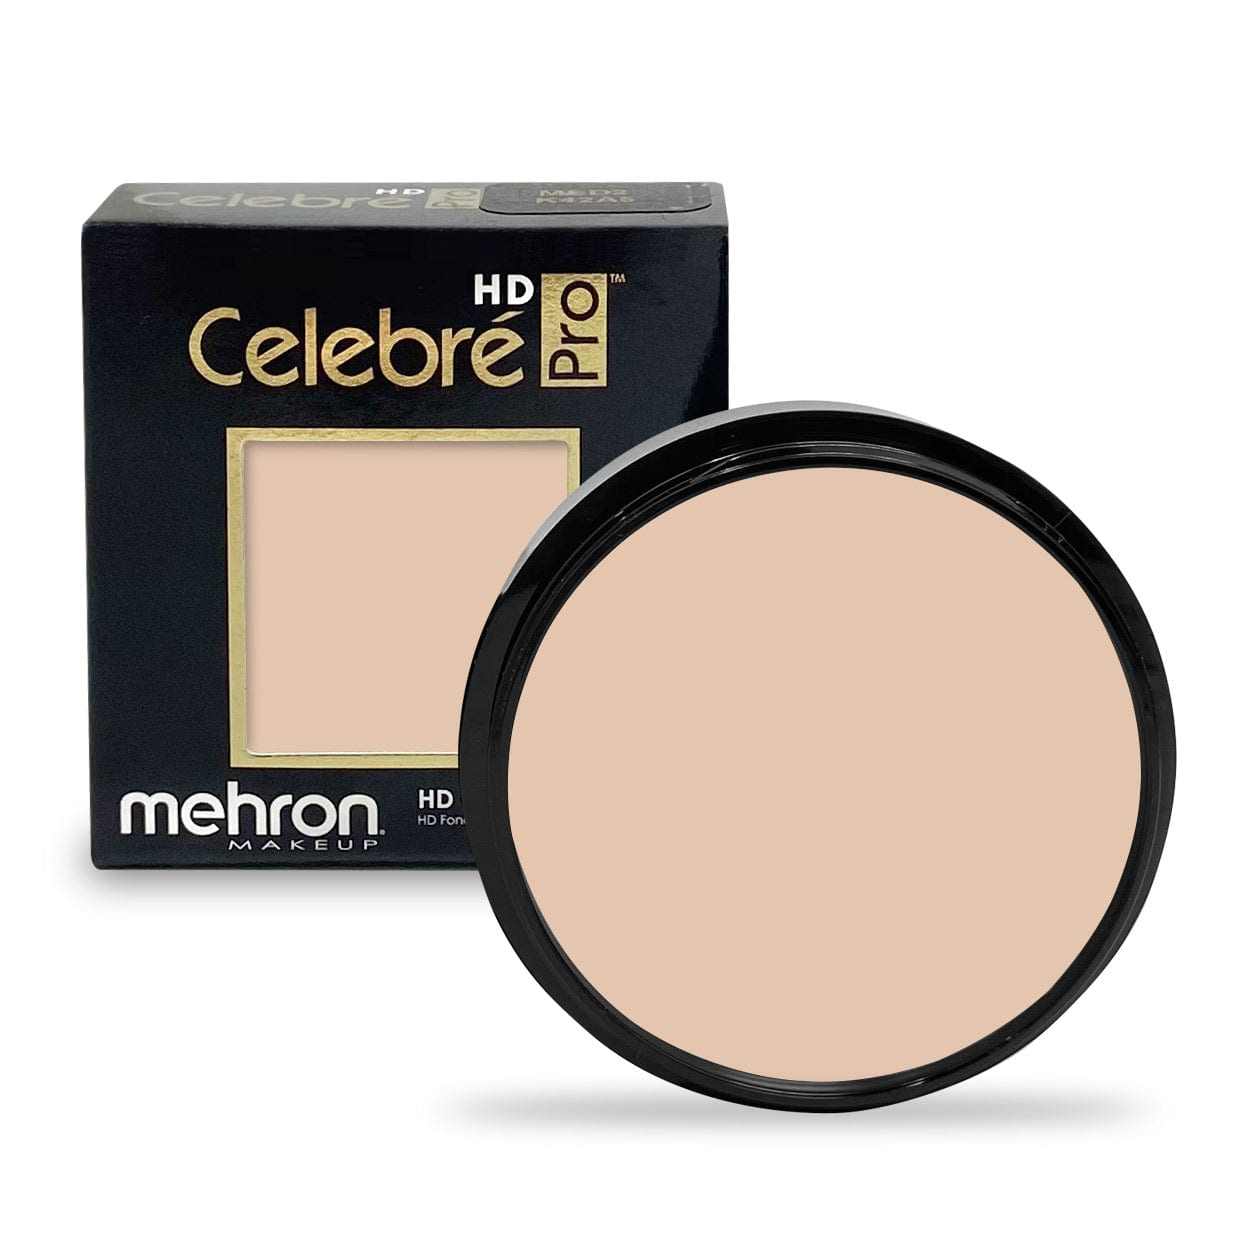 Mehron Celebre Pro HD-Cream 25g - Light 2 - Mehron